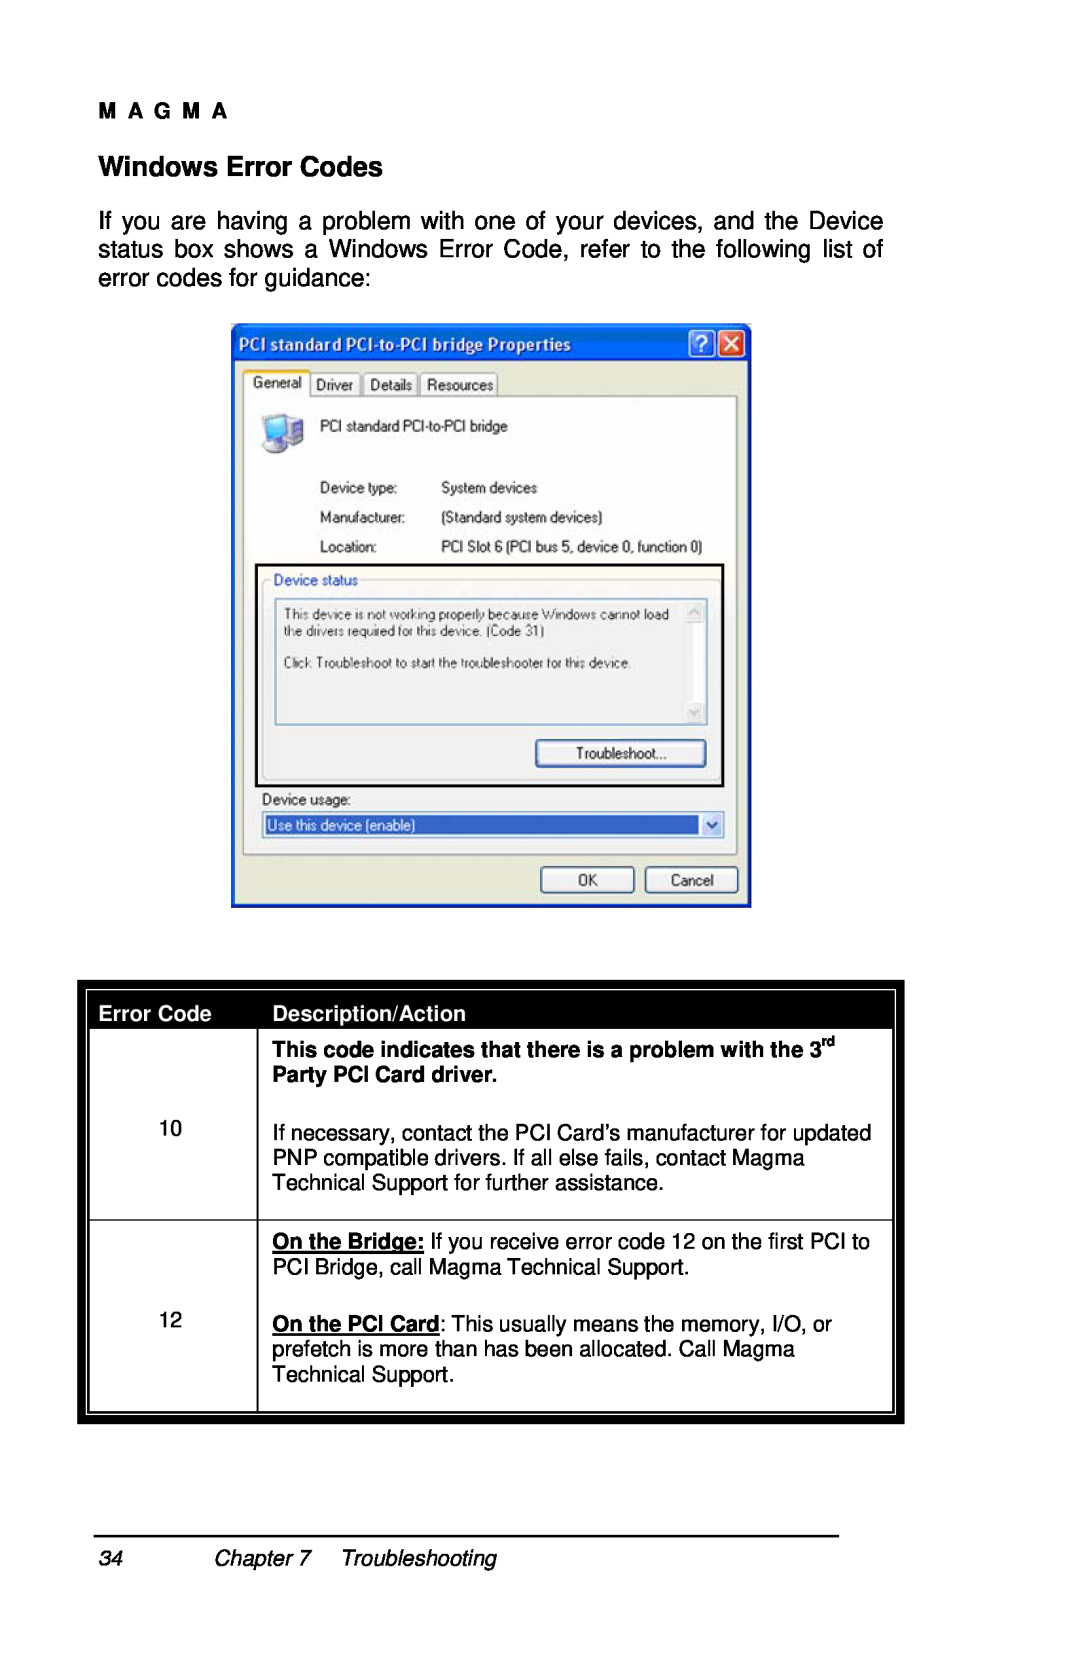 Magma P13RR-TEL user manual Windows Error Codes, M A G M A, Description/Action, Troubleshooting 